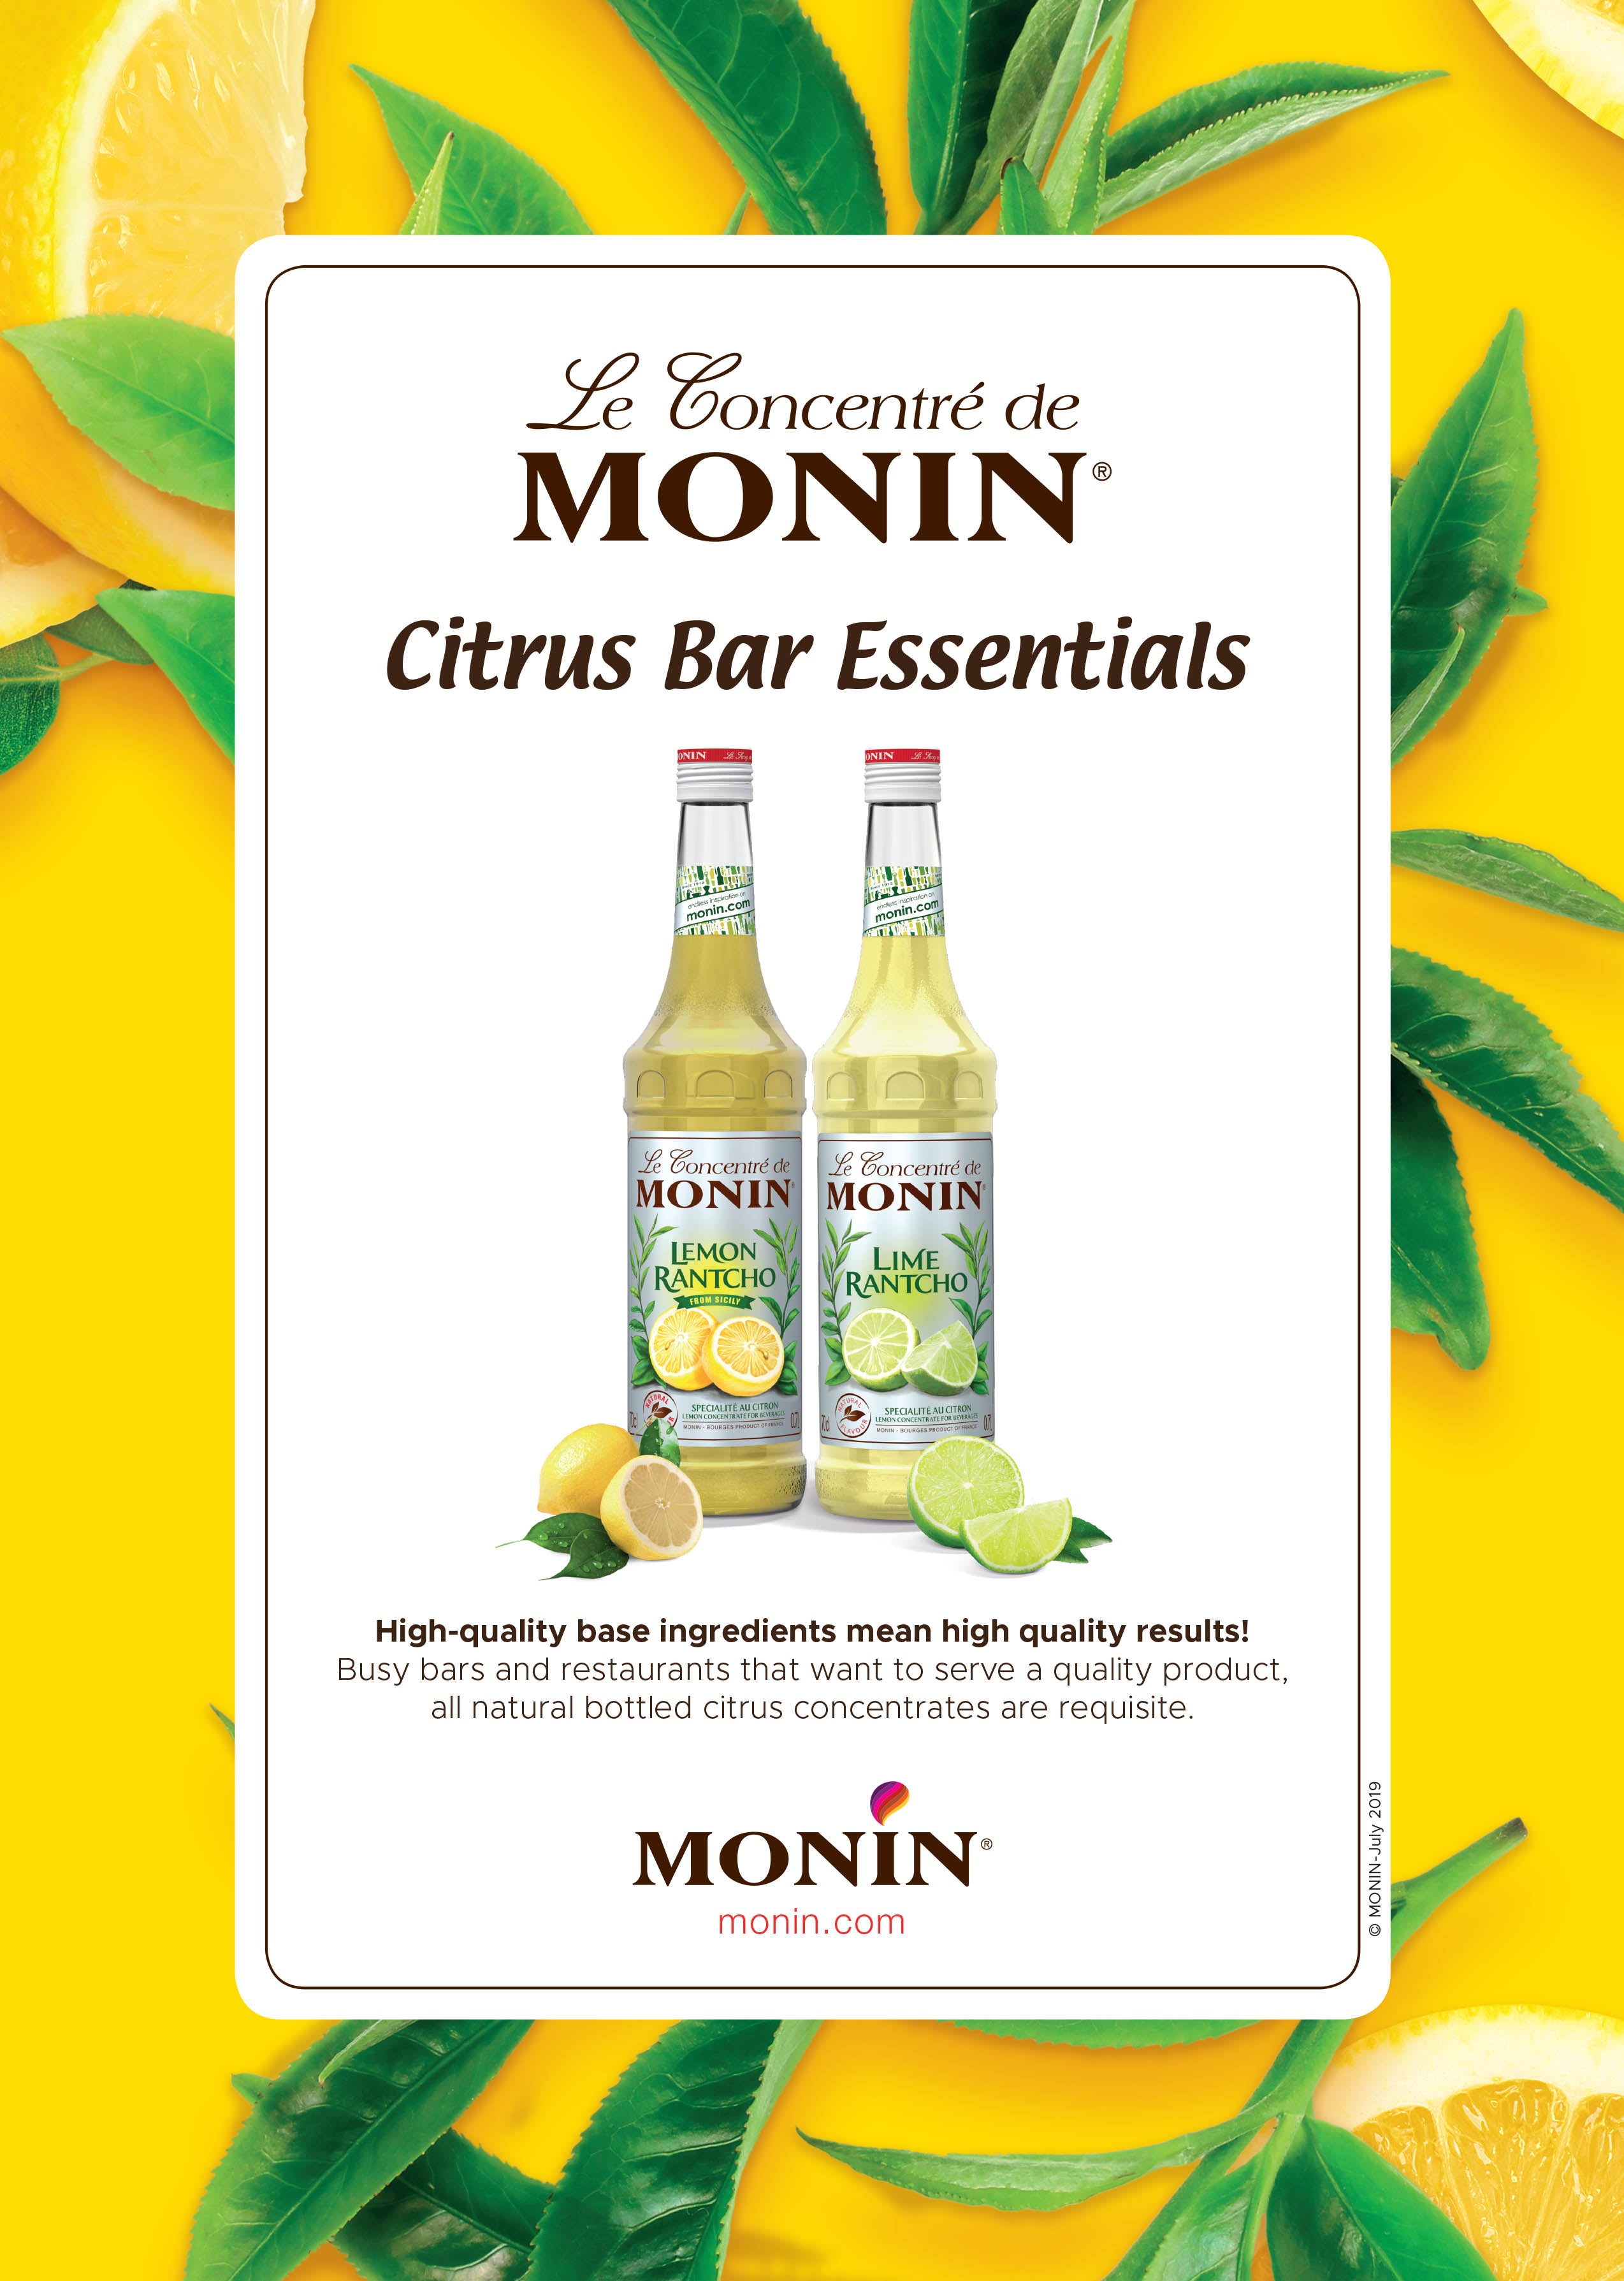 Monin Lemon Rantcho Syrup 700ml (Box of 6)